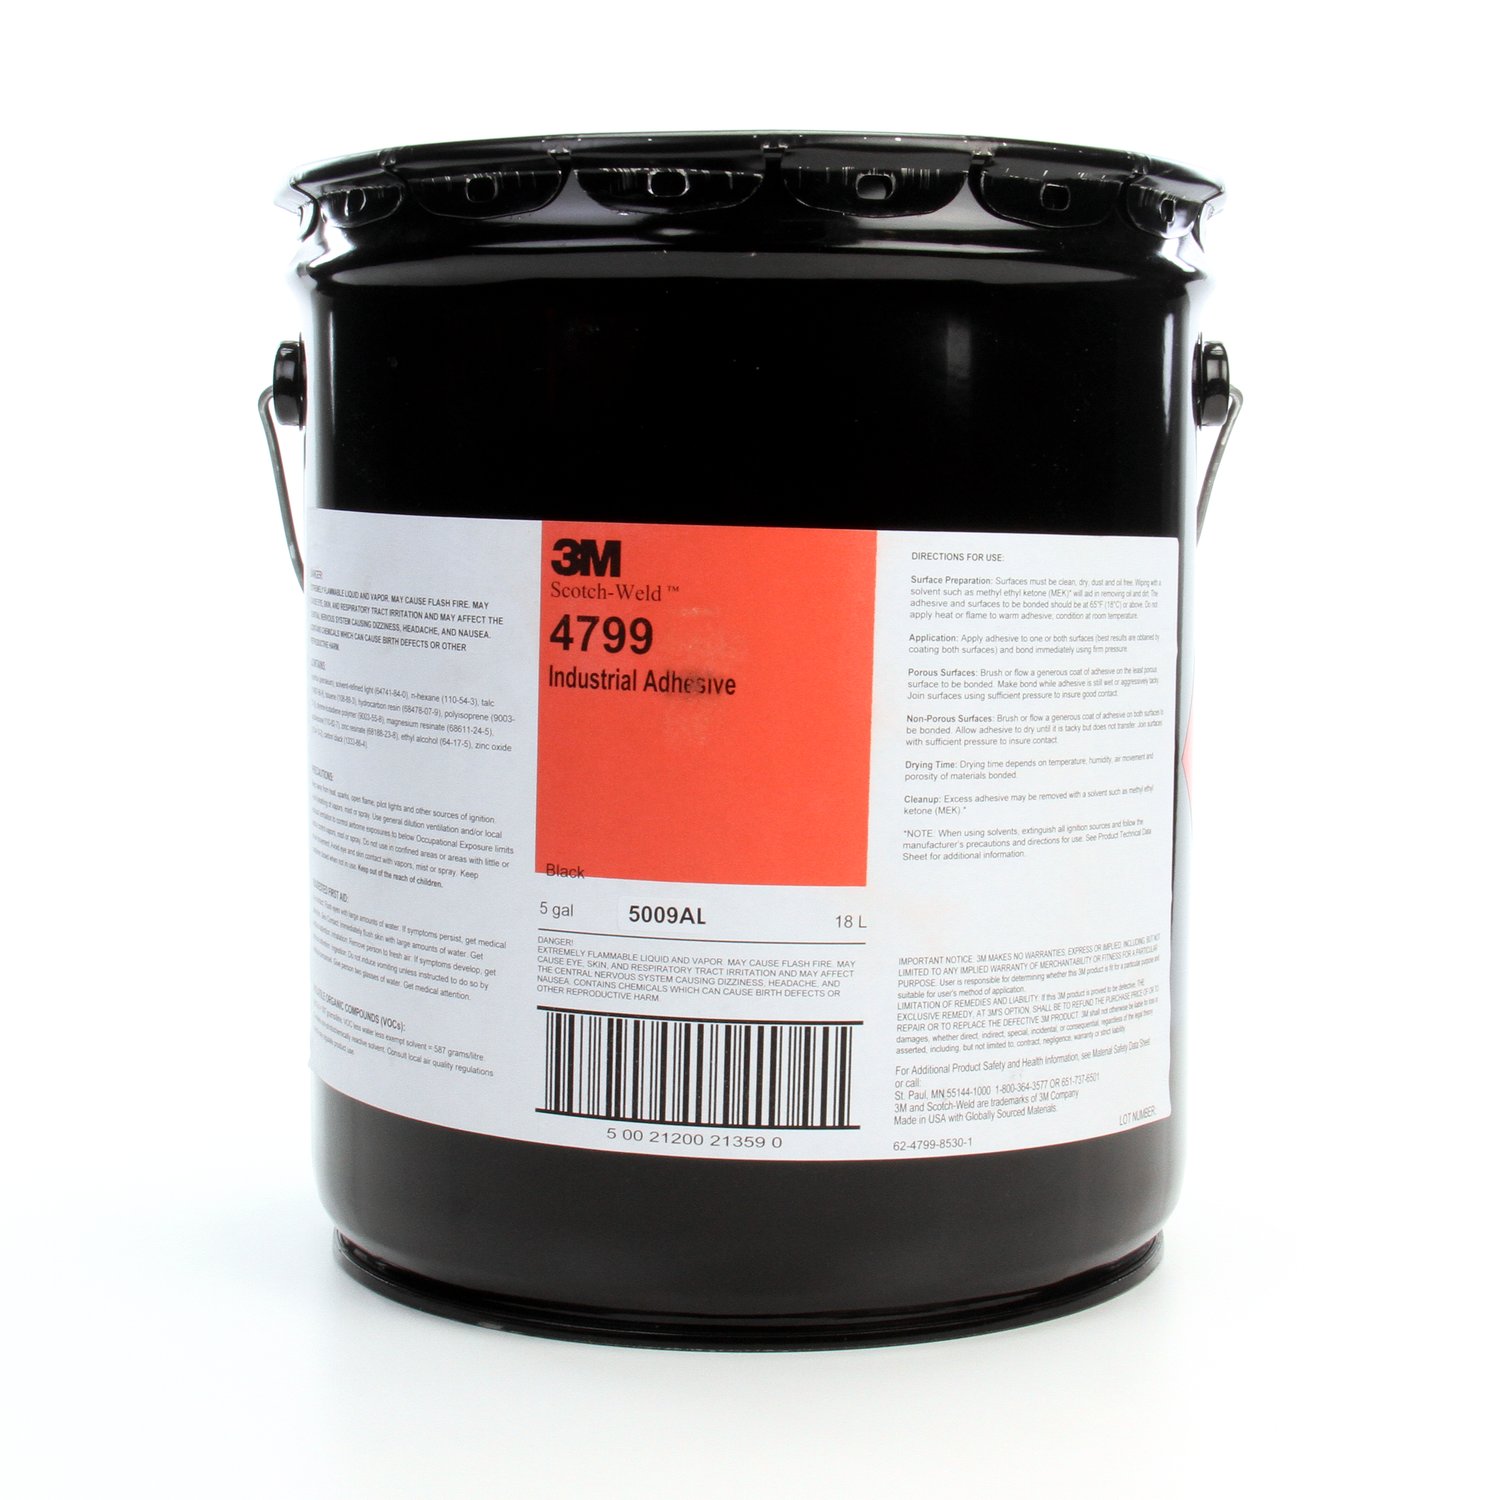 7000000928 - 3M Industrial Adhesive 4799, Black, 5 Gallon Drum (Pail)